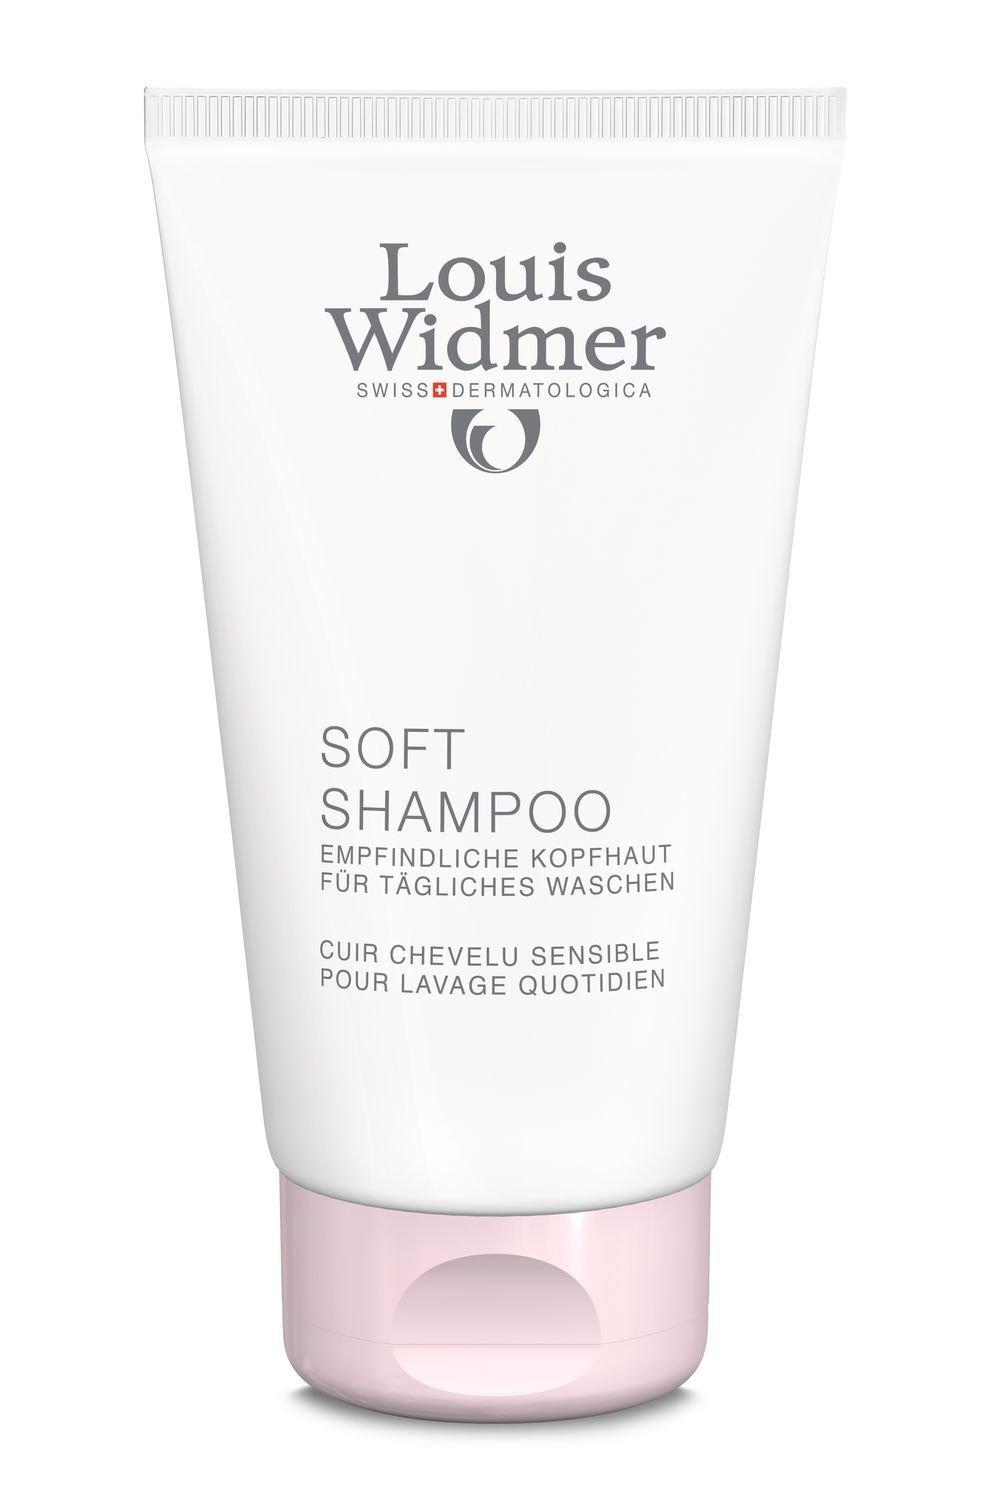 Louis Widmer Soft Shampoo parf Soft Shampoo parfumisé 